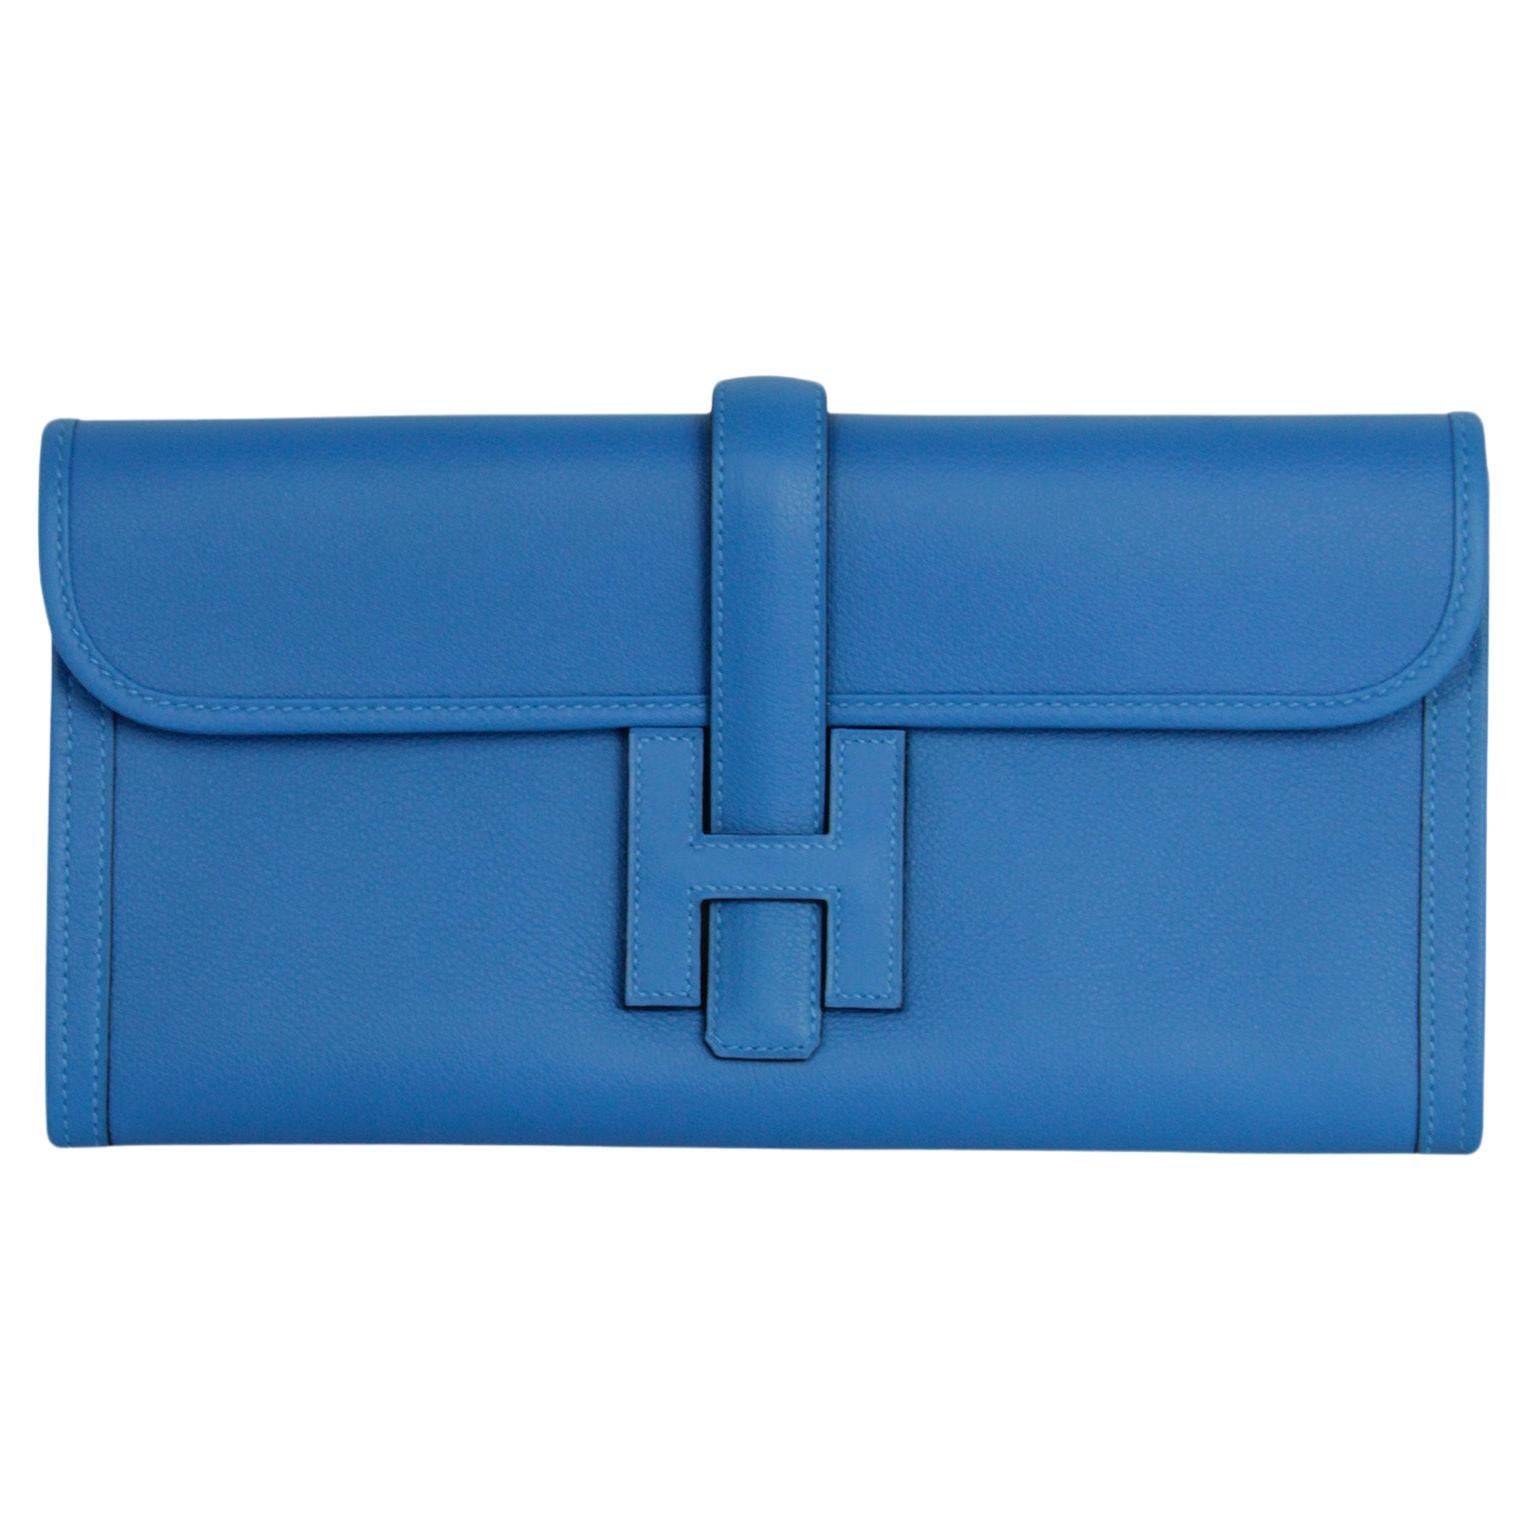 Hermes Blue Swift Leather H Jige Elan Clutch Bag For Sale